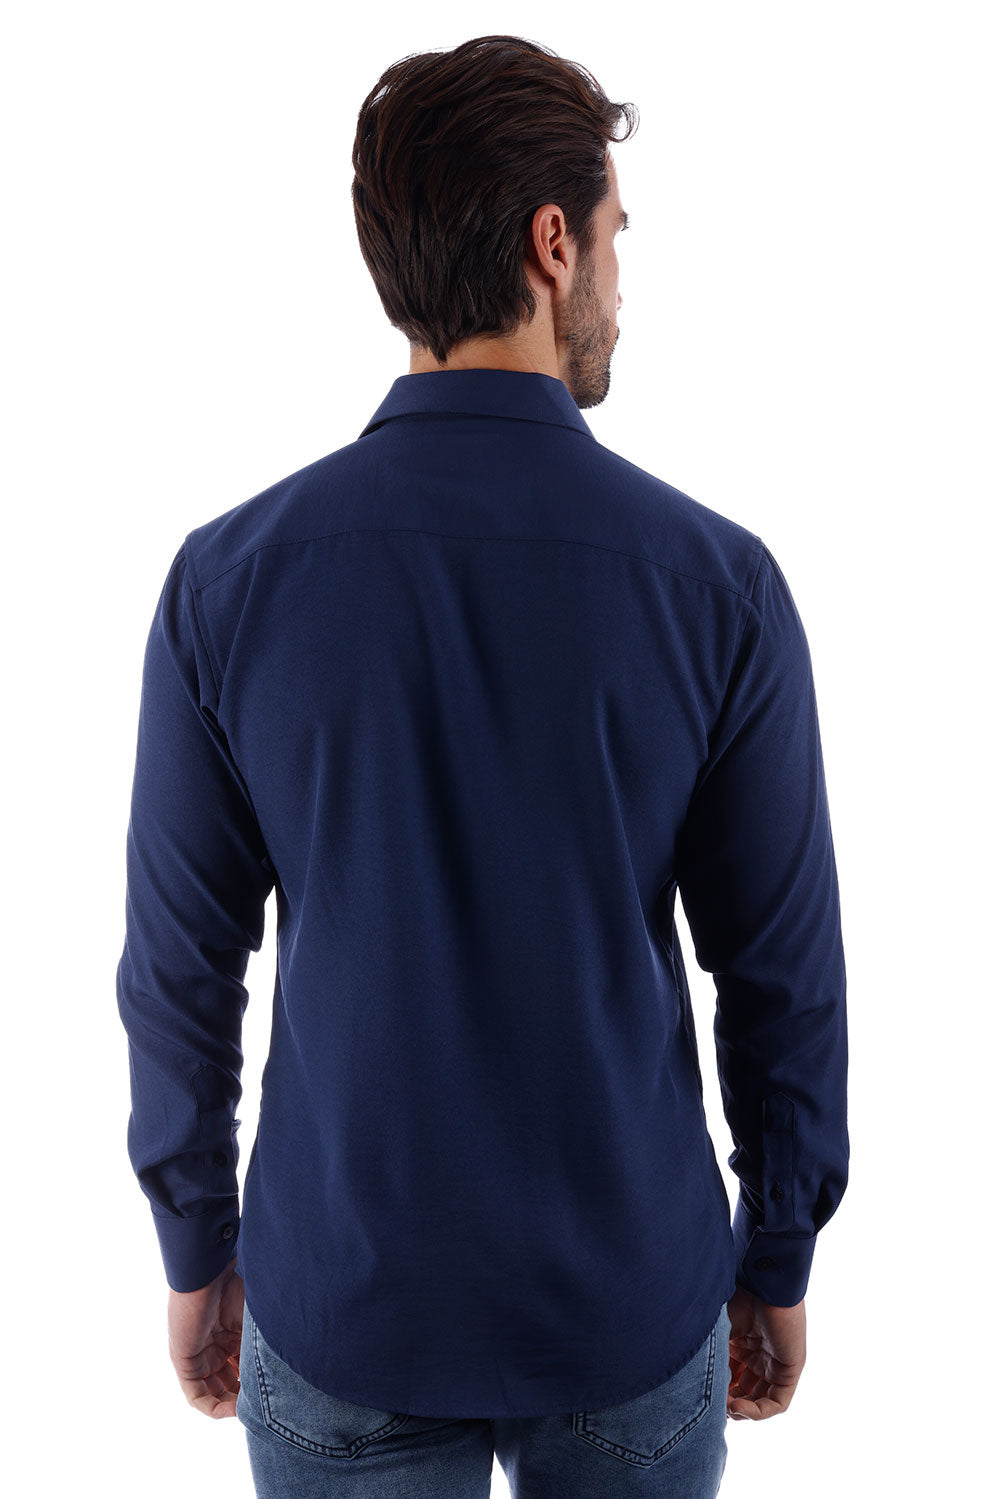 Navy Star Men's Shirt Long Sleeves Casual Button Down Shirts